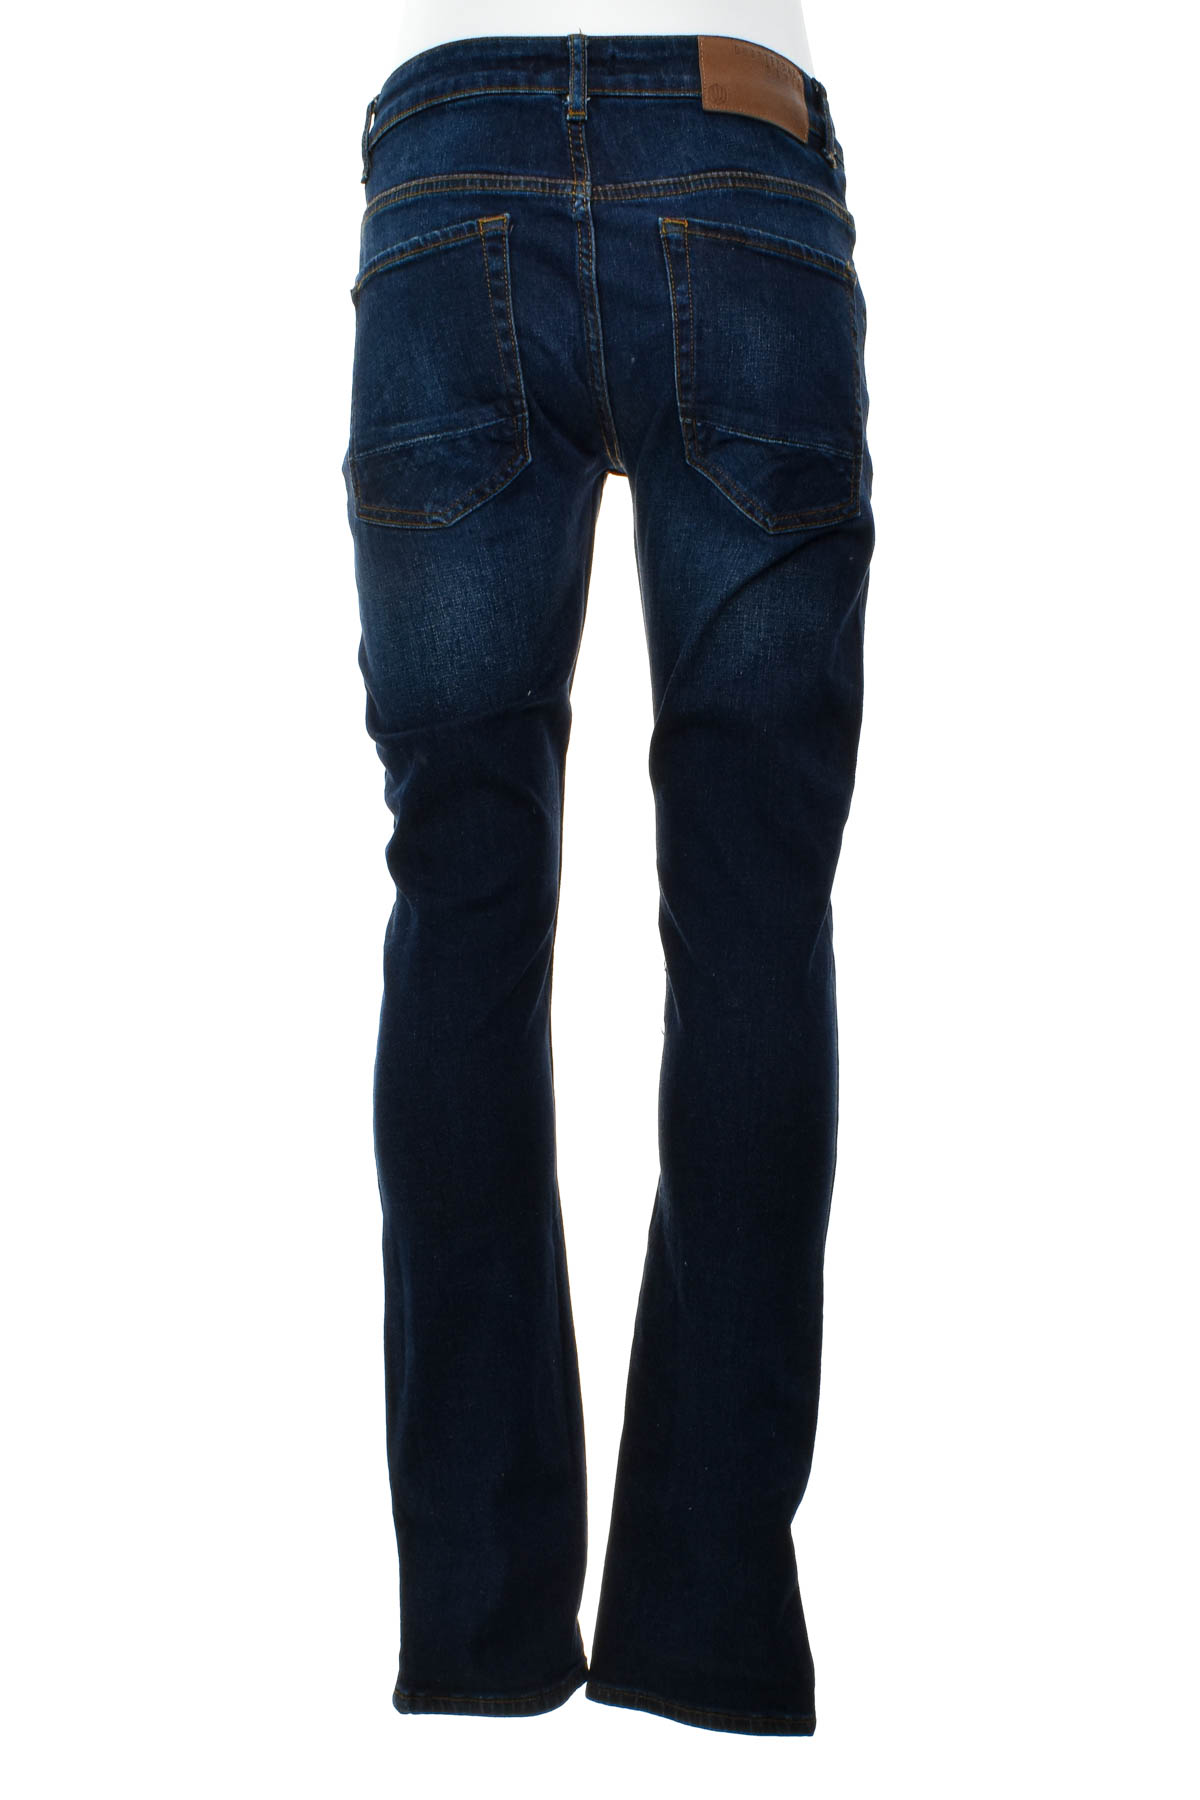 Men's jeans - QUARTERBACK by jbc - 1